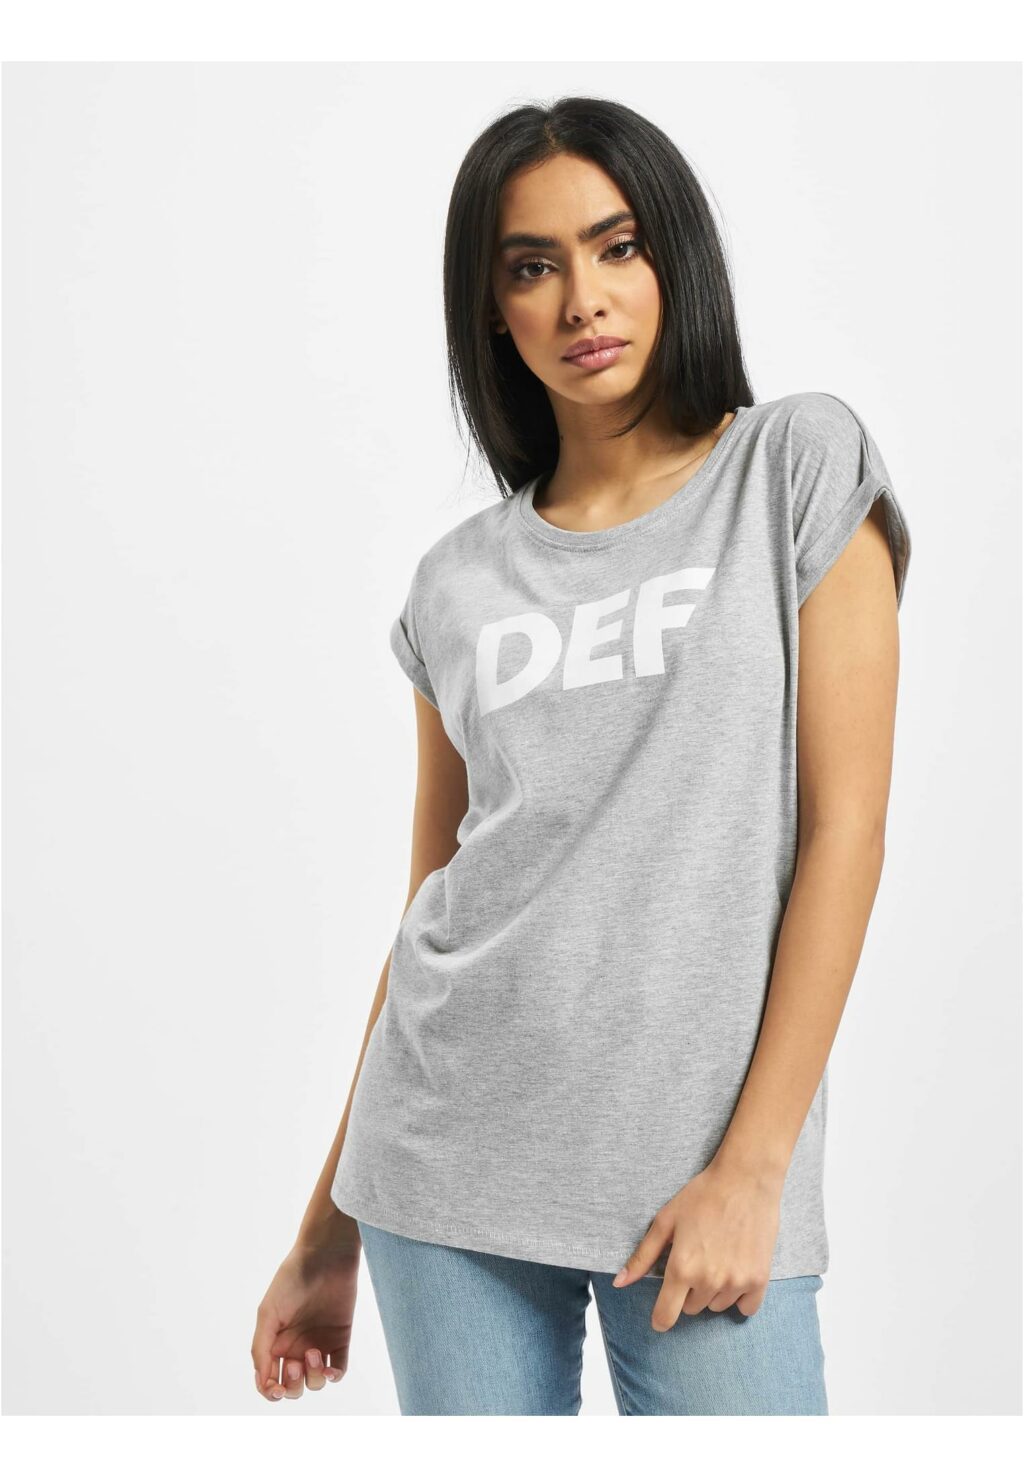 DEF Sizza T-Shirt grey DFTS056T